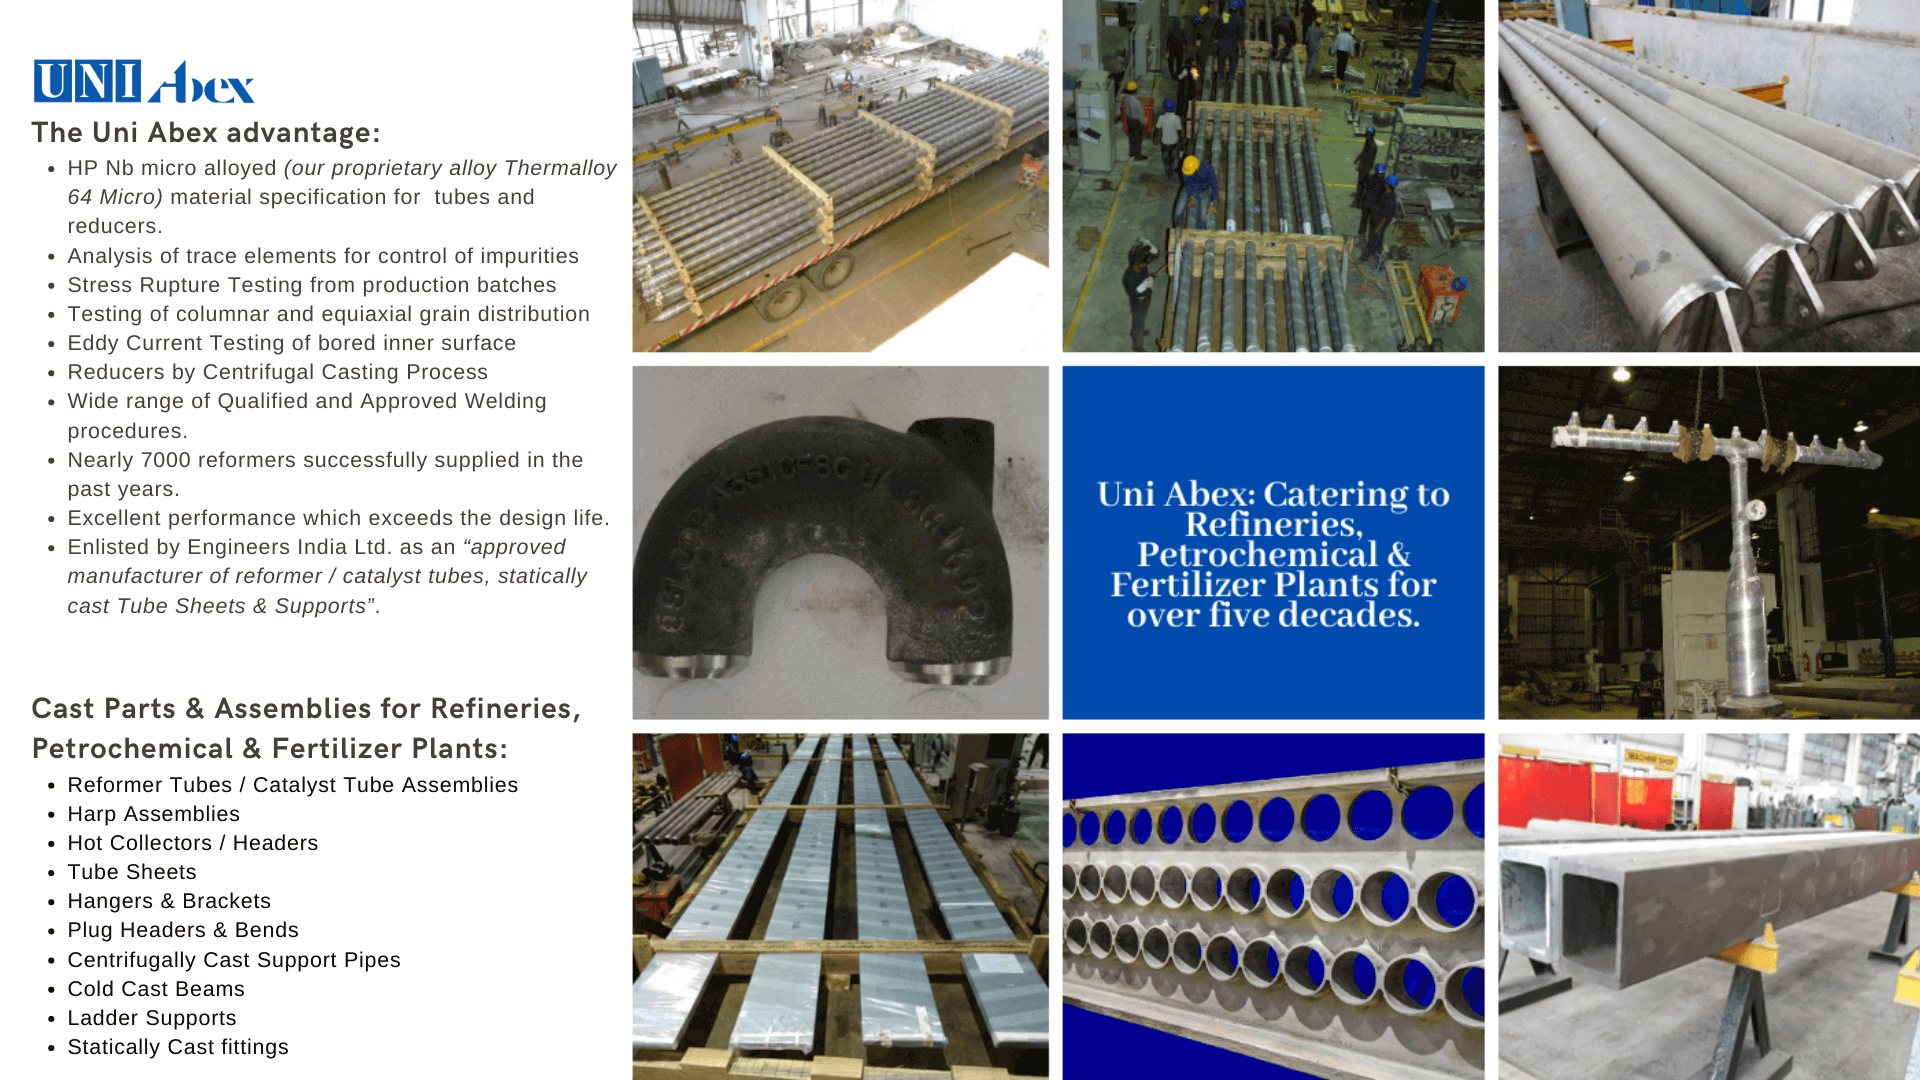  Uniabex Top Alloy Steel Casting Manufacturer - Alloy Steel Castings and assemblies to Petroleum Refineries & Fertilizer Plants 